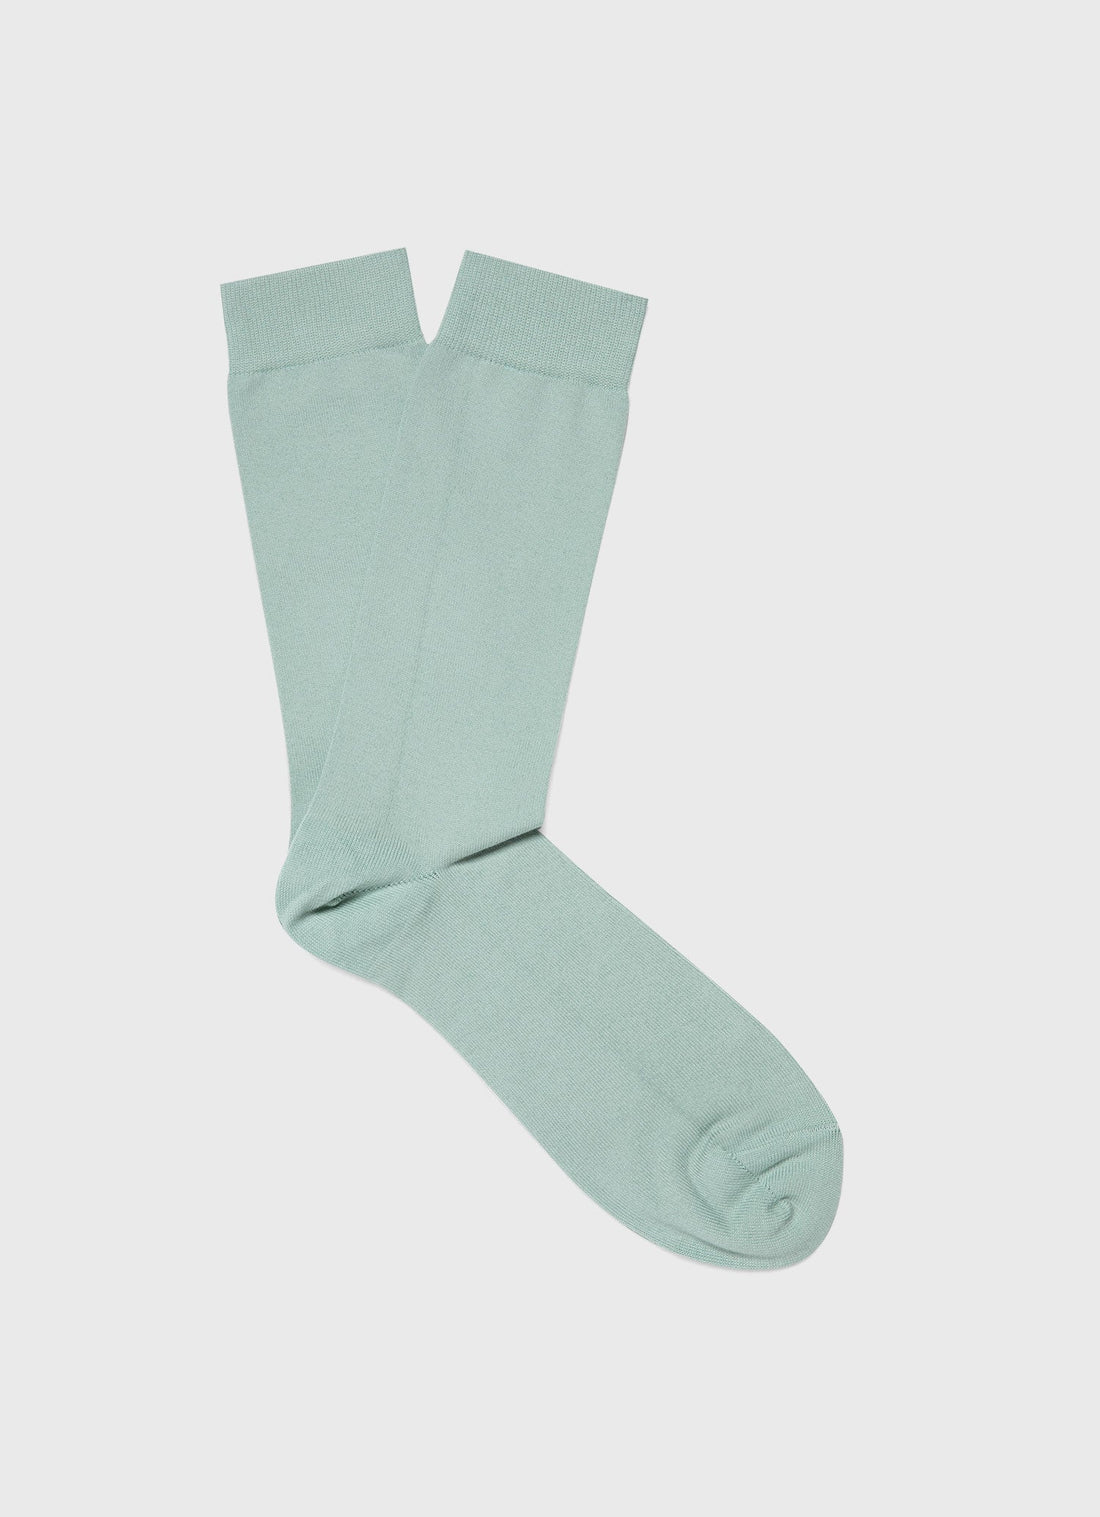 Men's Cotton Socks in Blue Sage